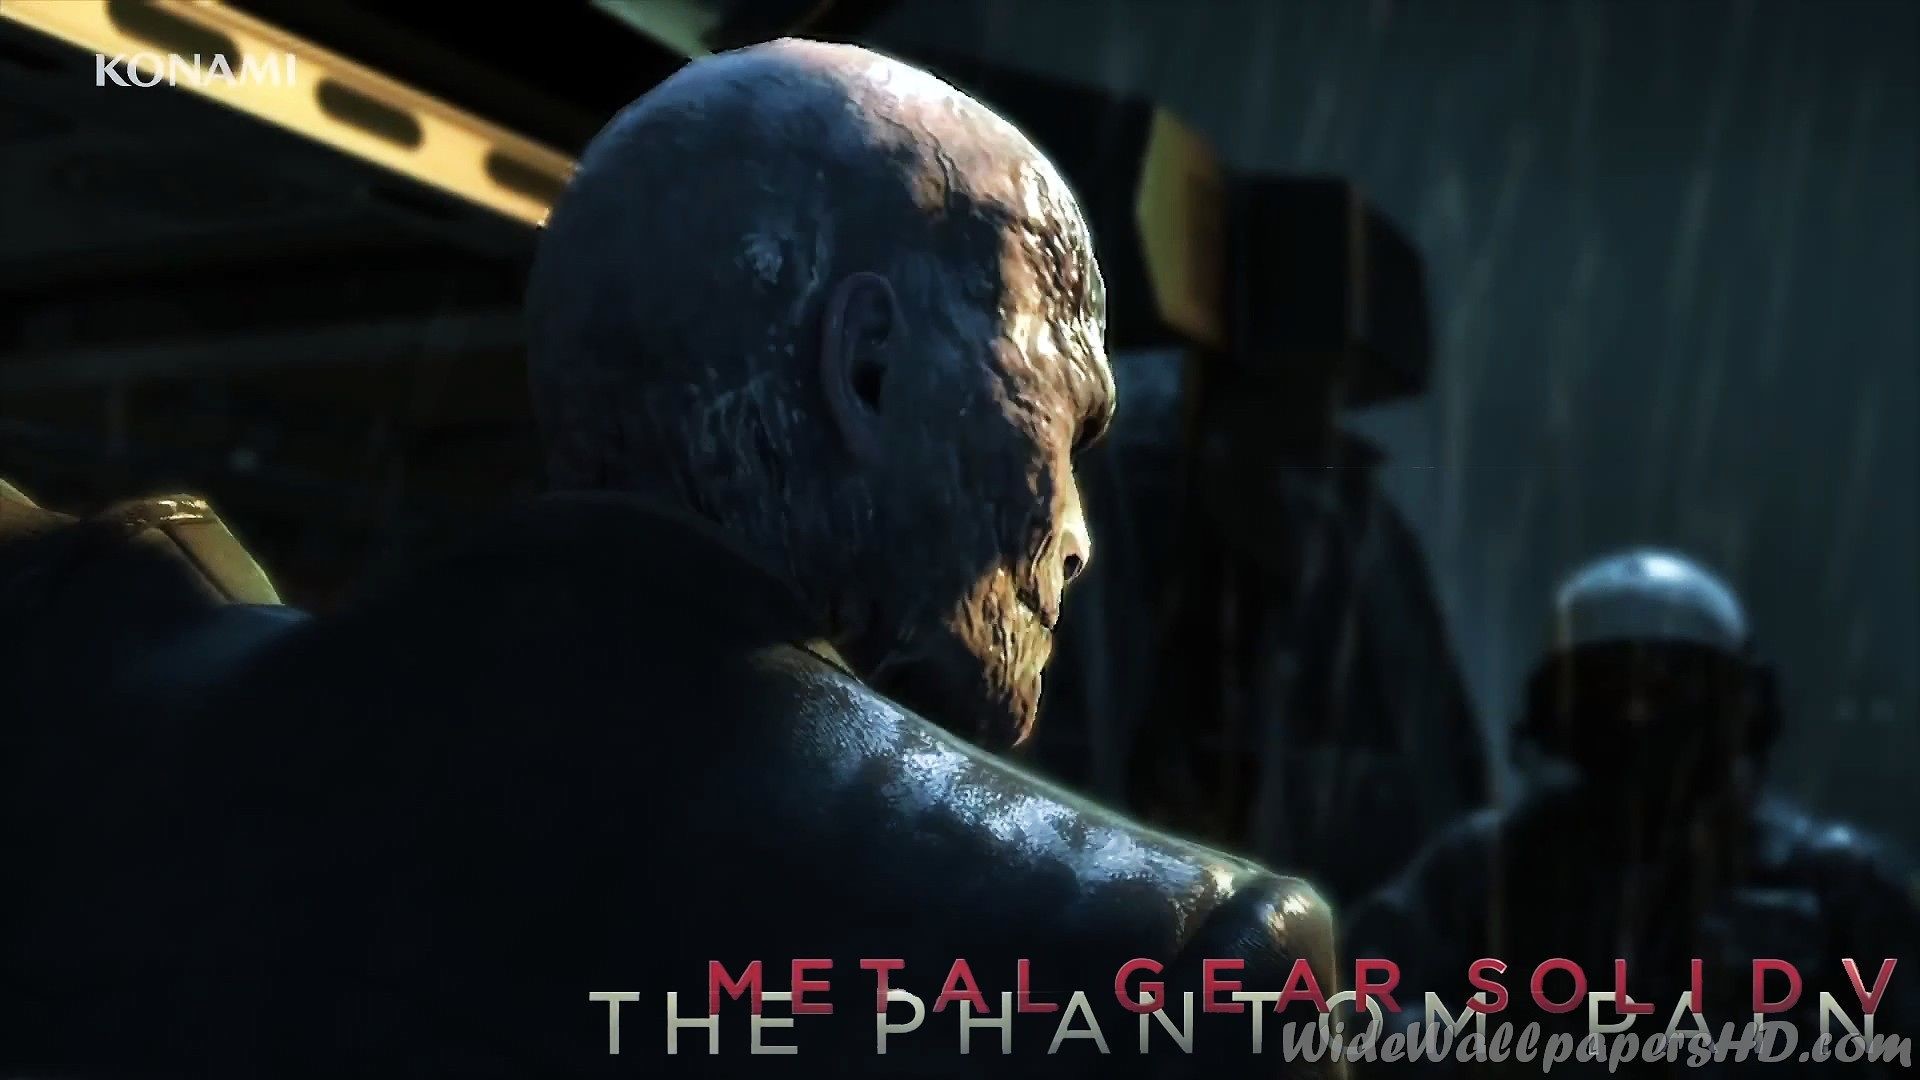 1920x1080 Phantom Pain - The Identity of Skull Face in MGS5? | moviepilot .